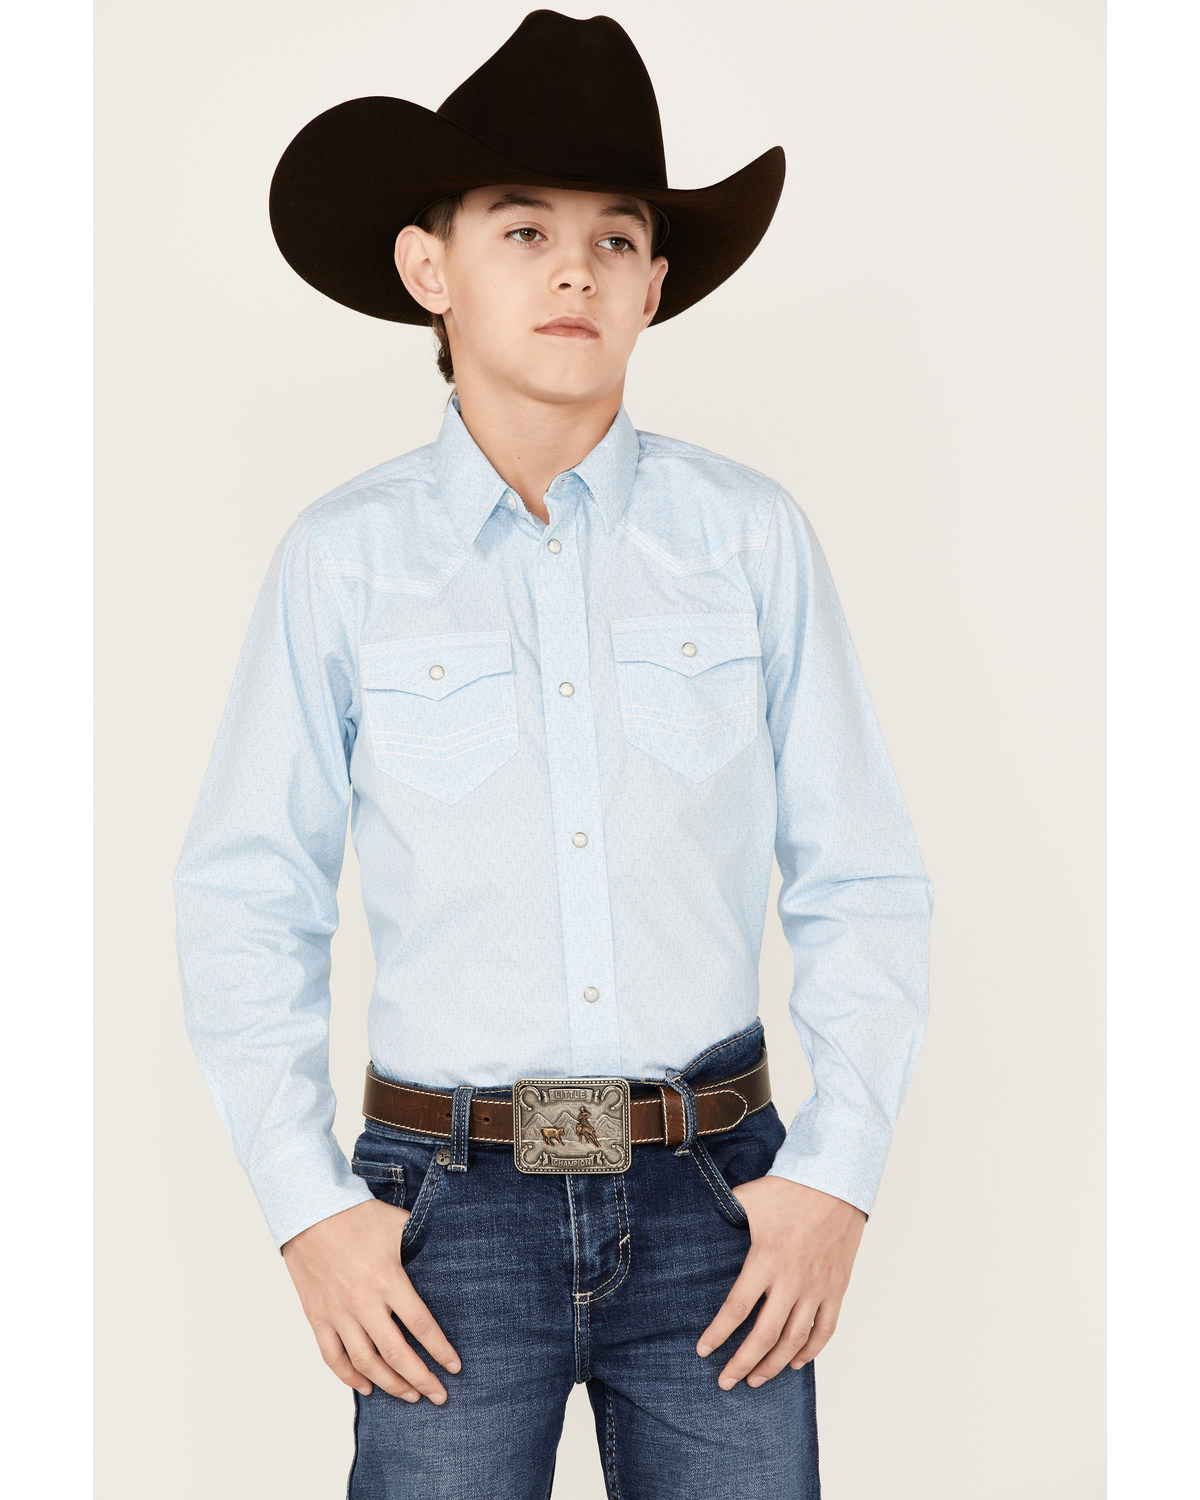 Cody James Boys' Print Long Sleeve Western Snap Shirt